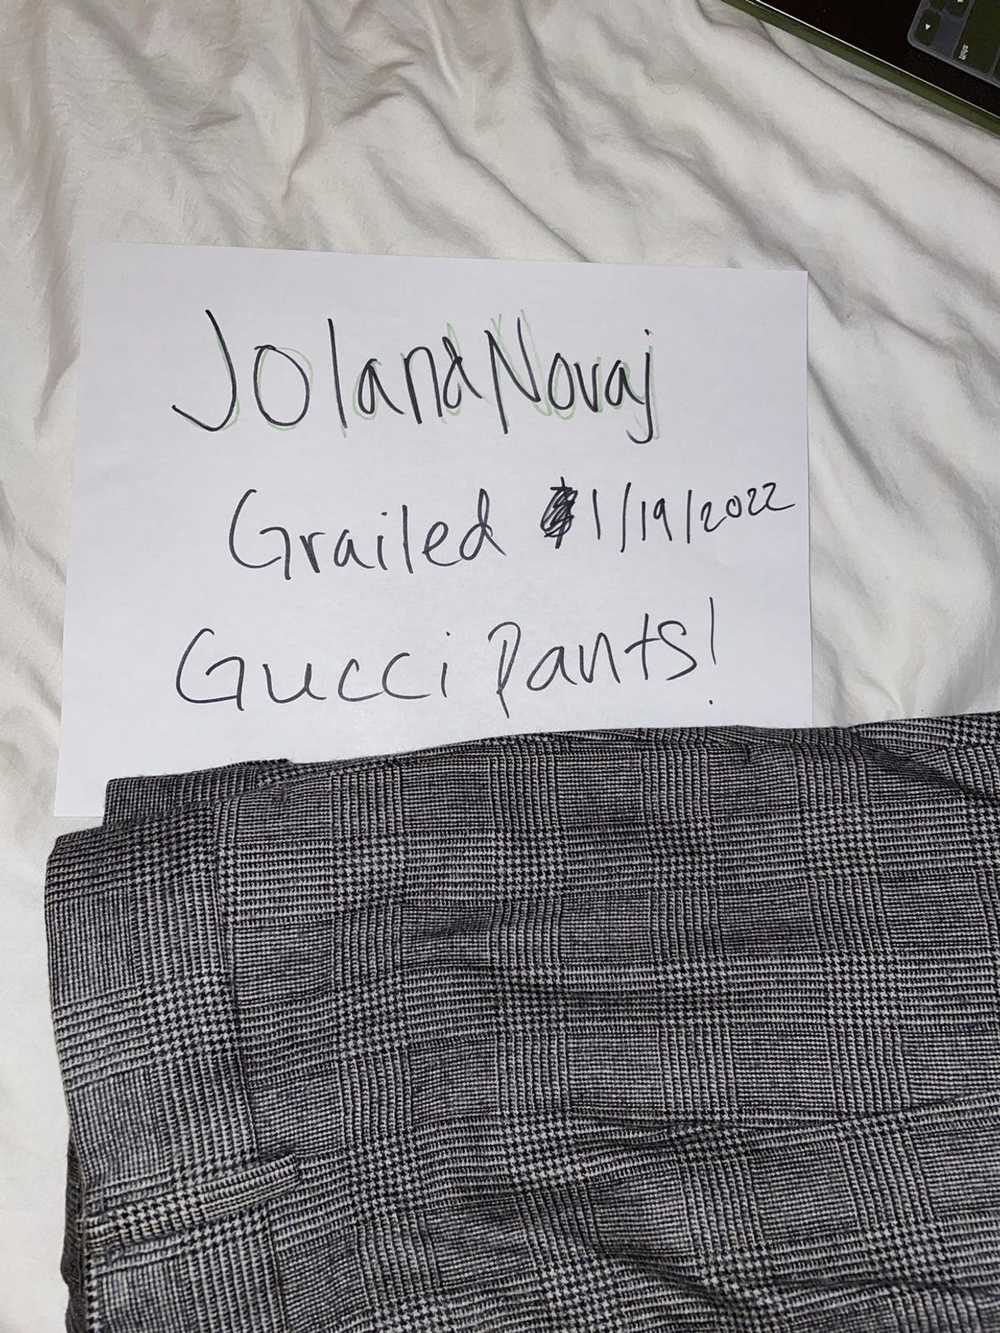 Gucci Gucci Pattered Pants (Vintage) - image 5